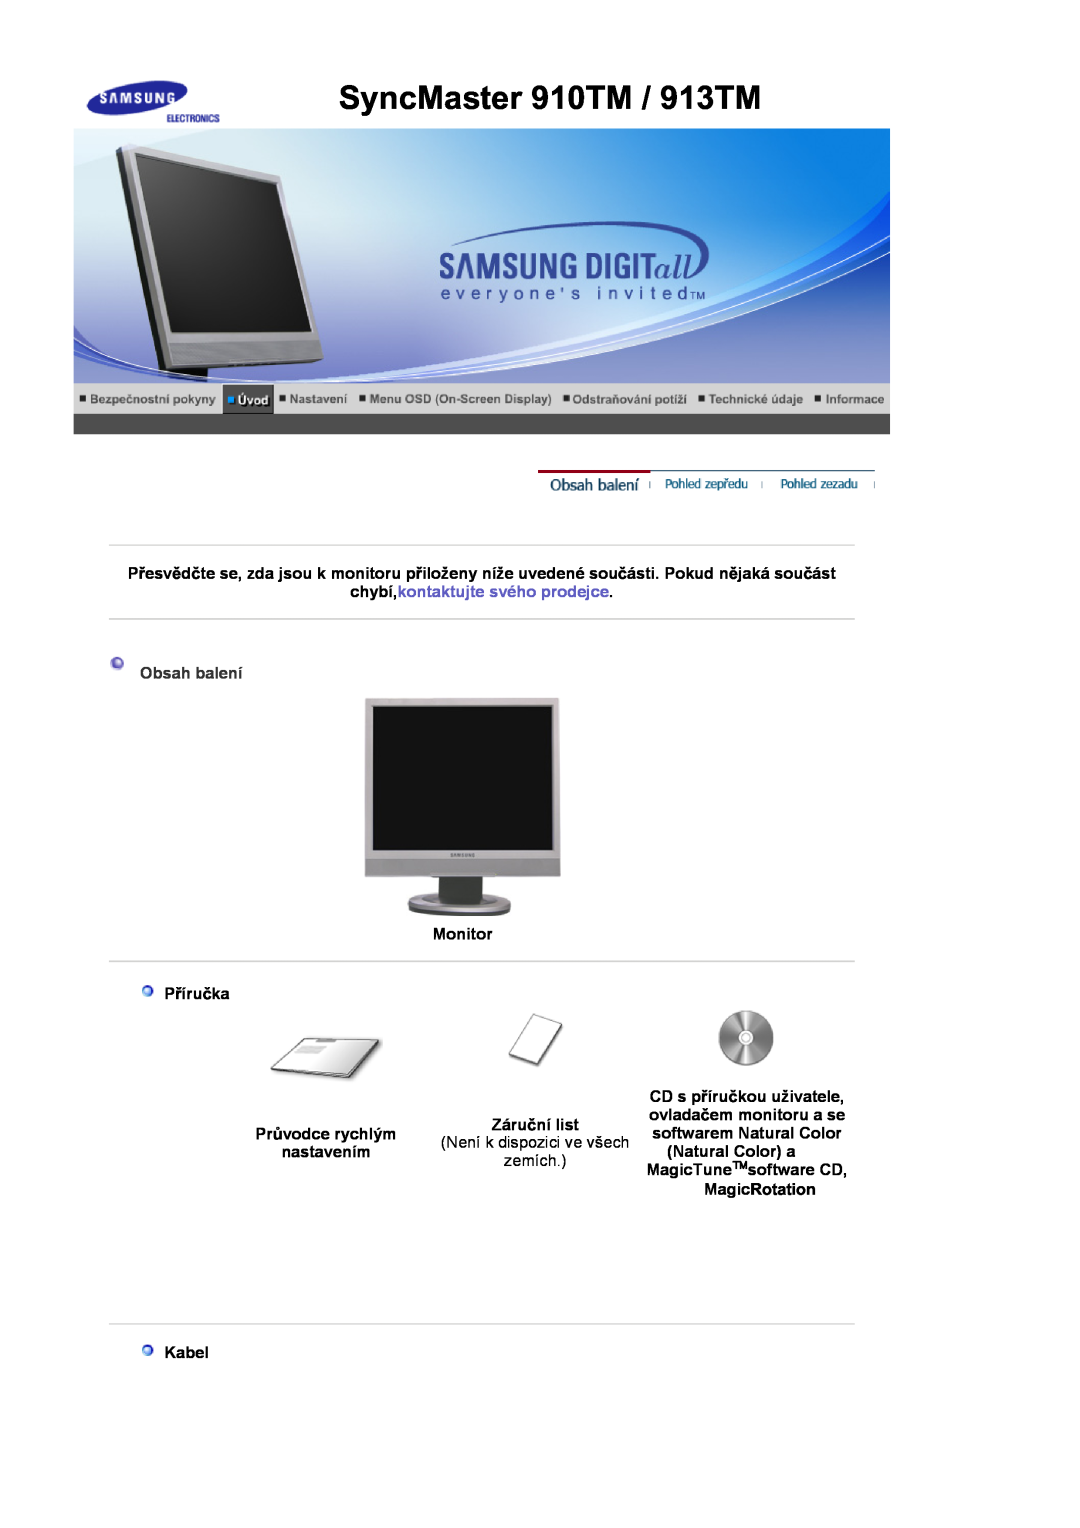 Samsung LS17MJSTSE/EDC SyncMaster 910TM / 913TM, Monitor PĜíruþka, Natural Color a MagicTune software CD MagicRotation 